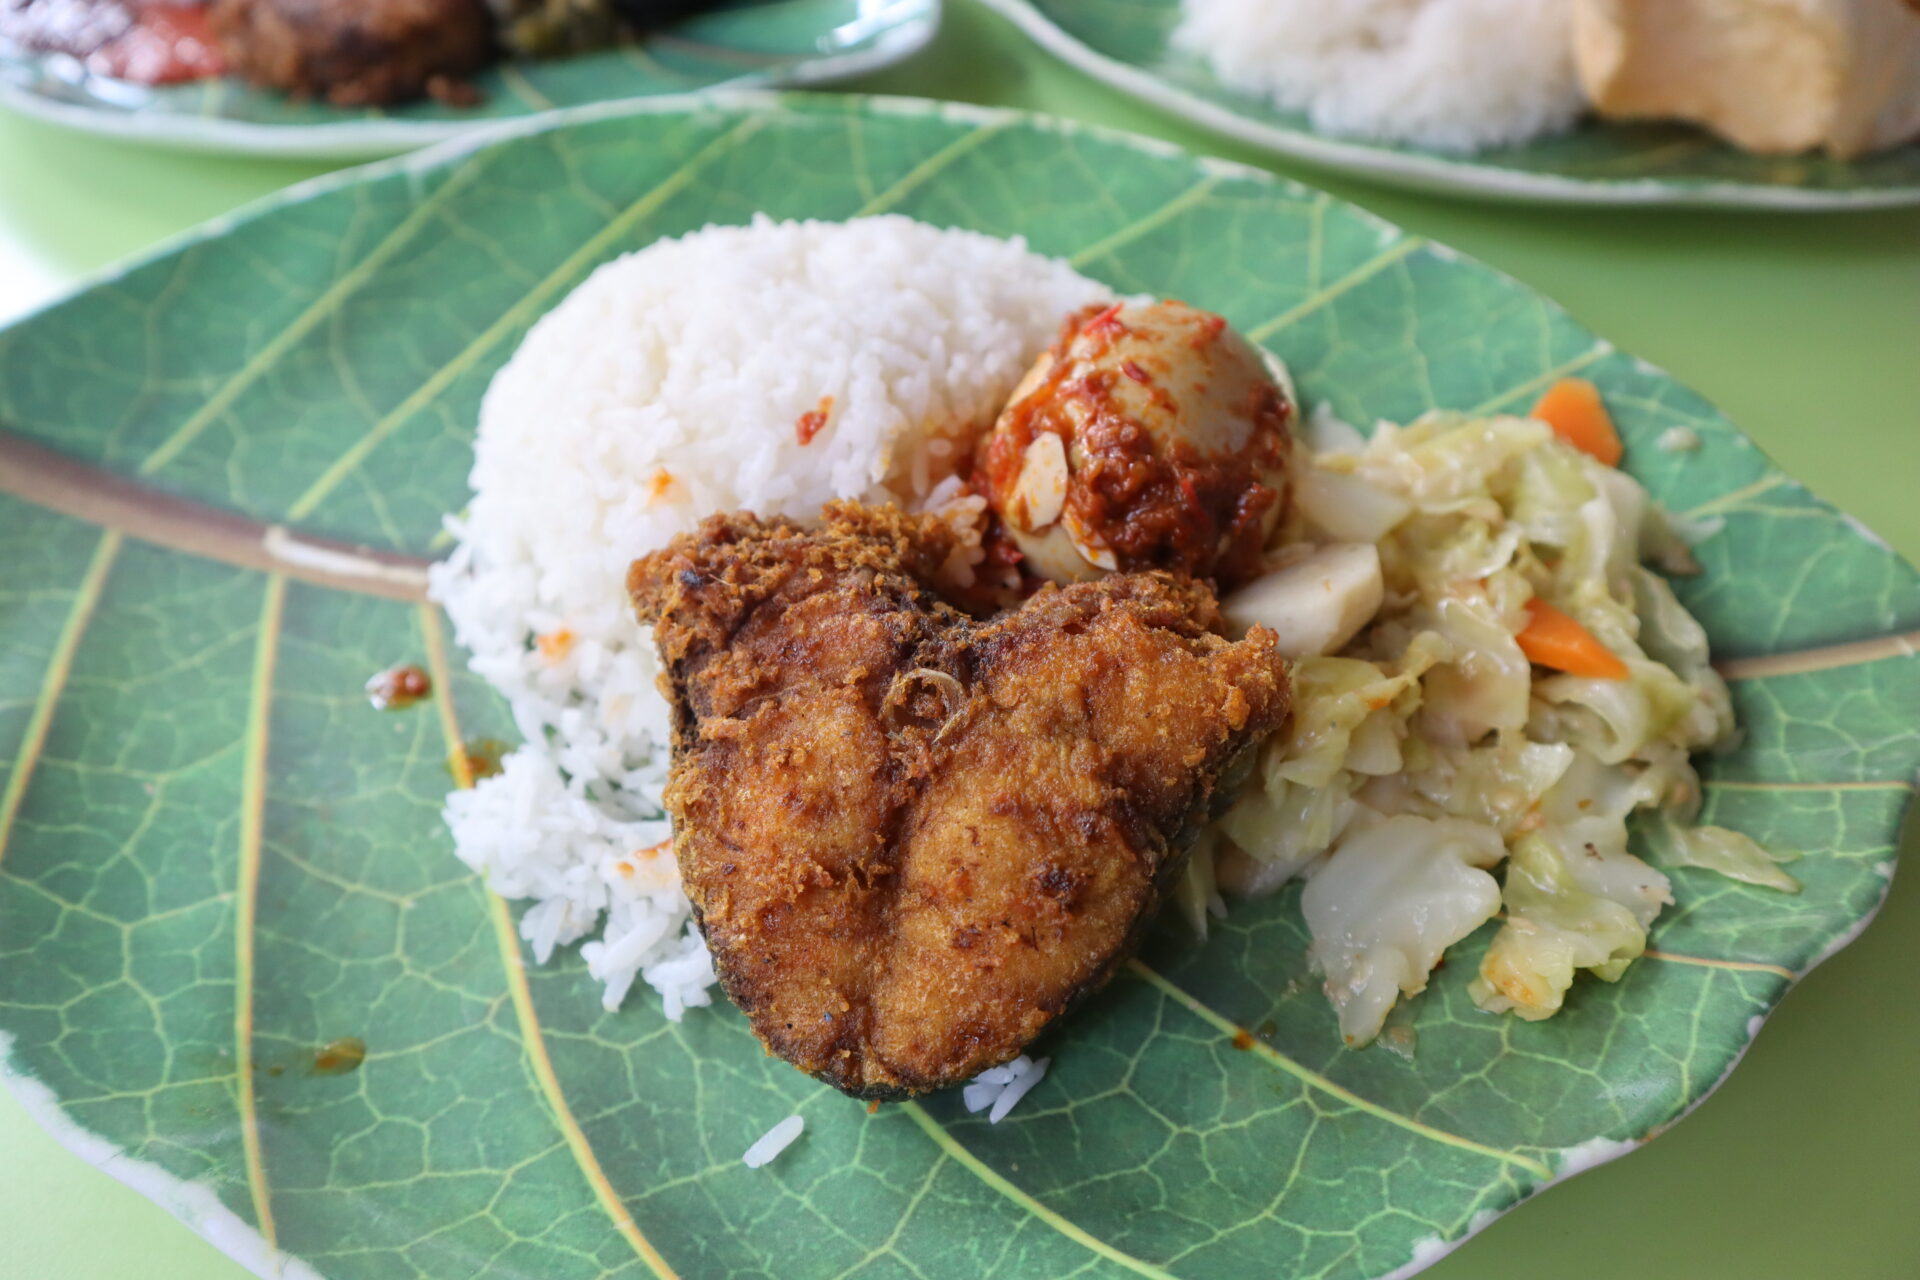 anthony indonesian cuisine - ikan goreng